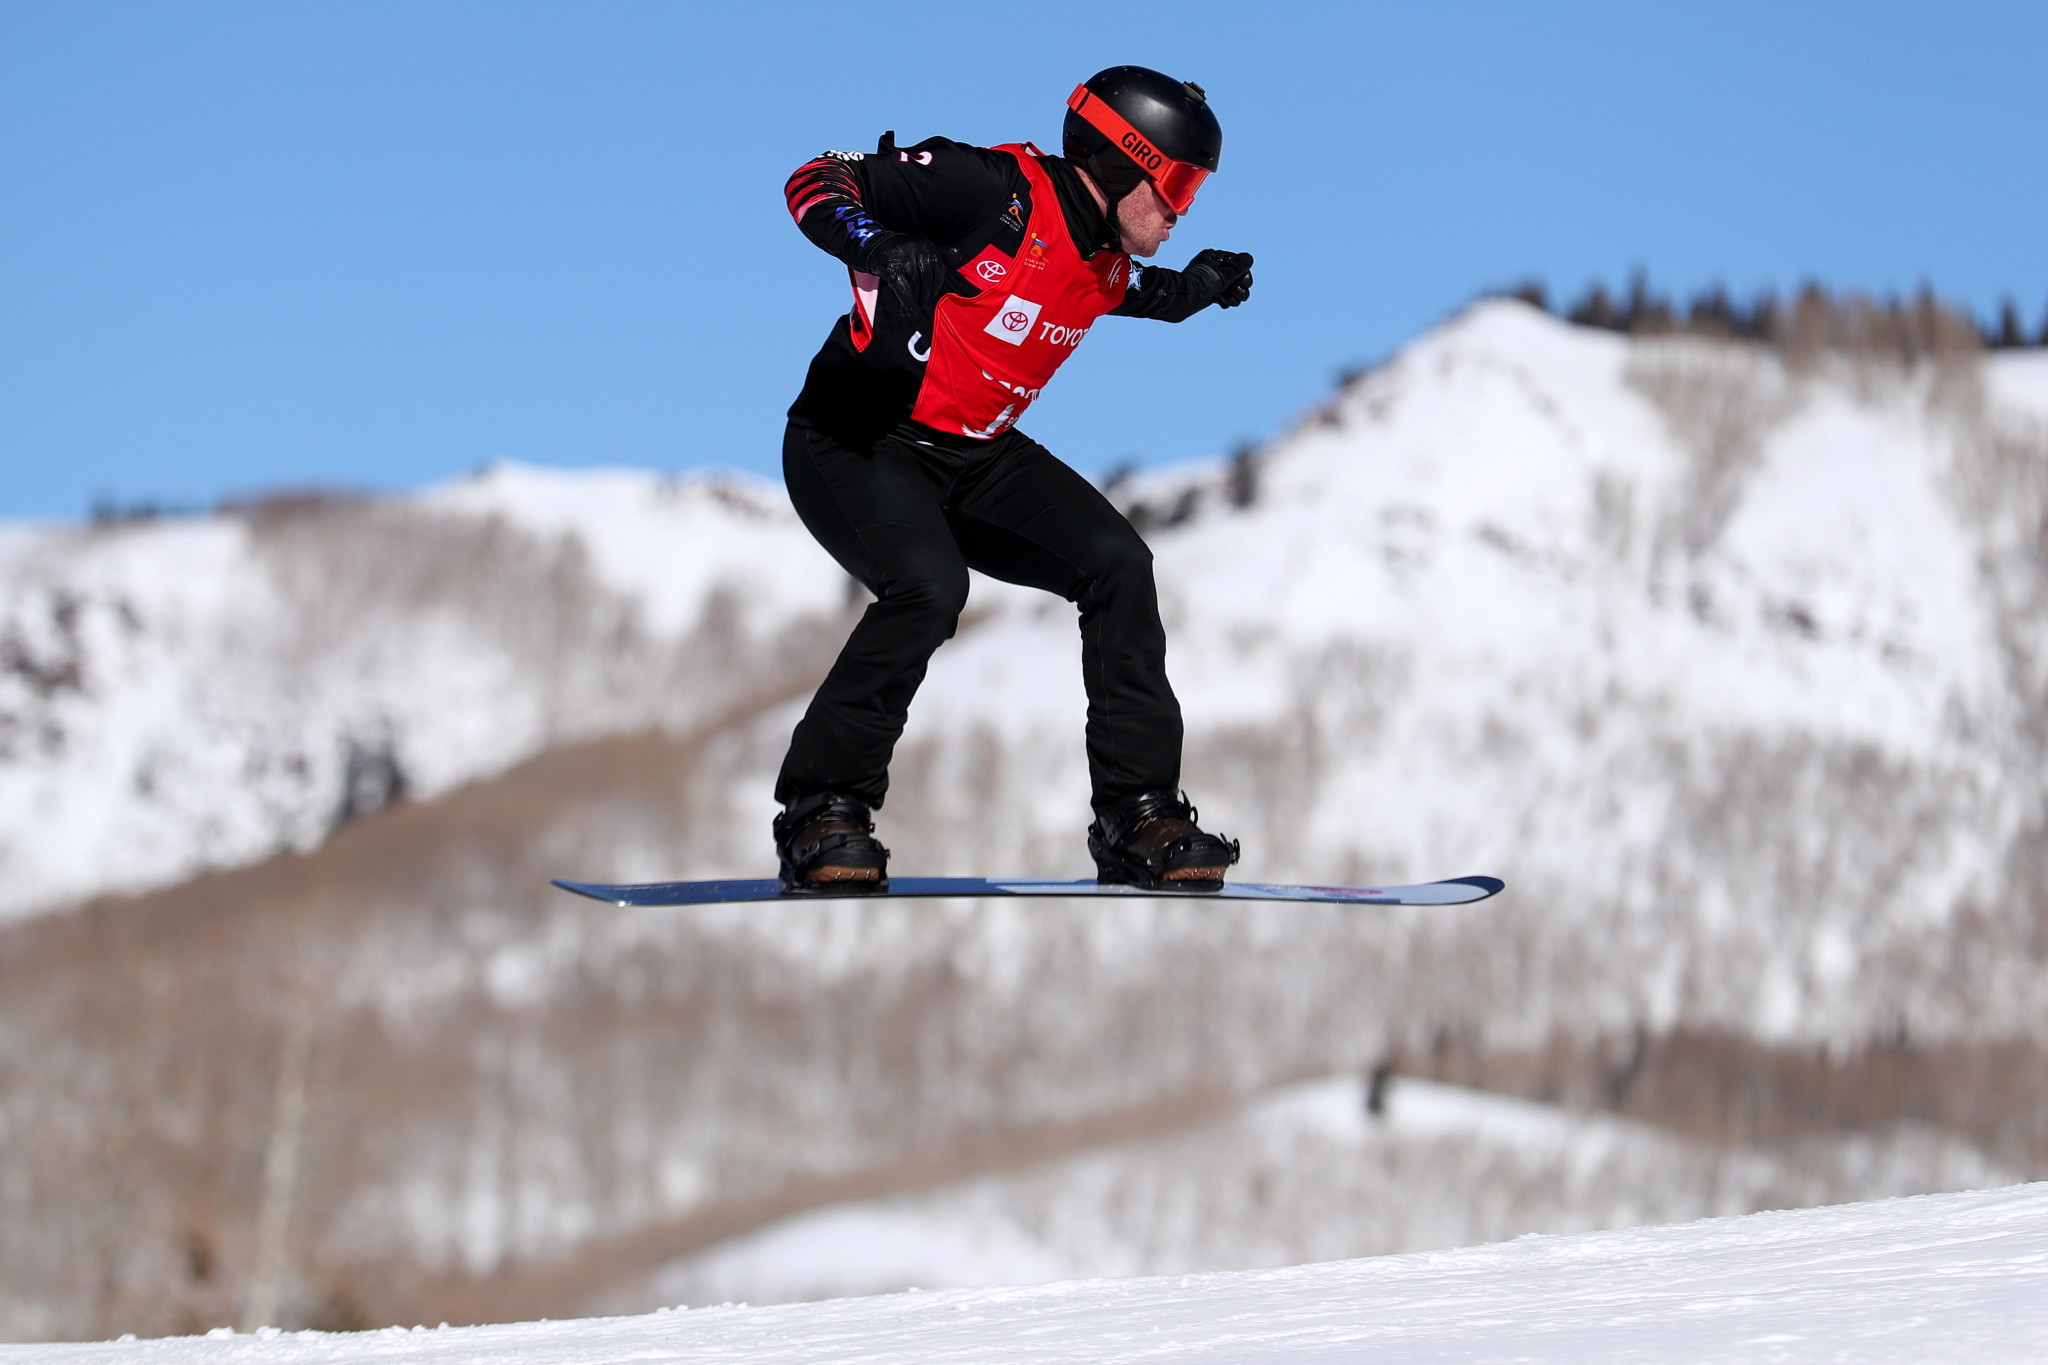 Mick Dierdorff will lead the men's snowboard cross team ©Getty Images